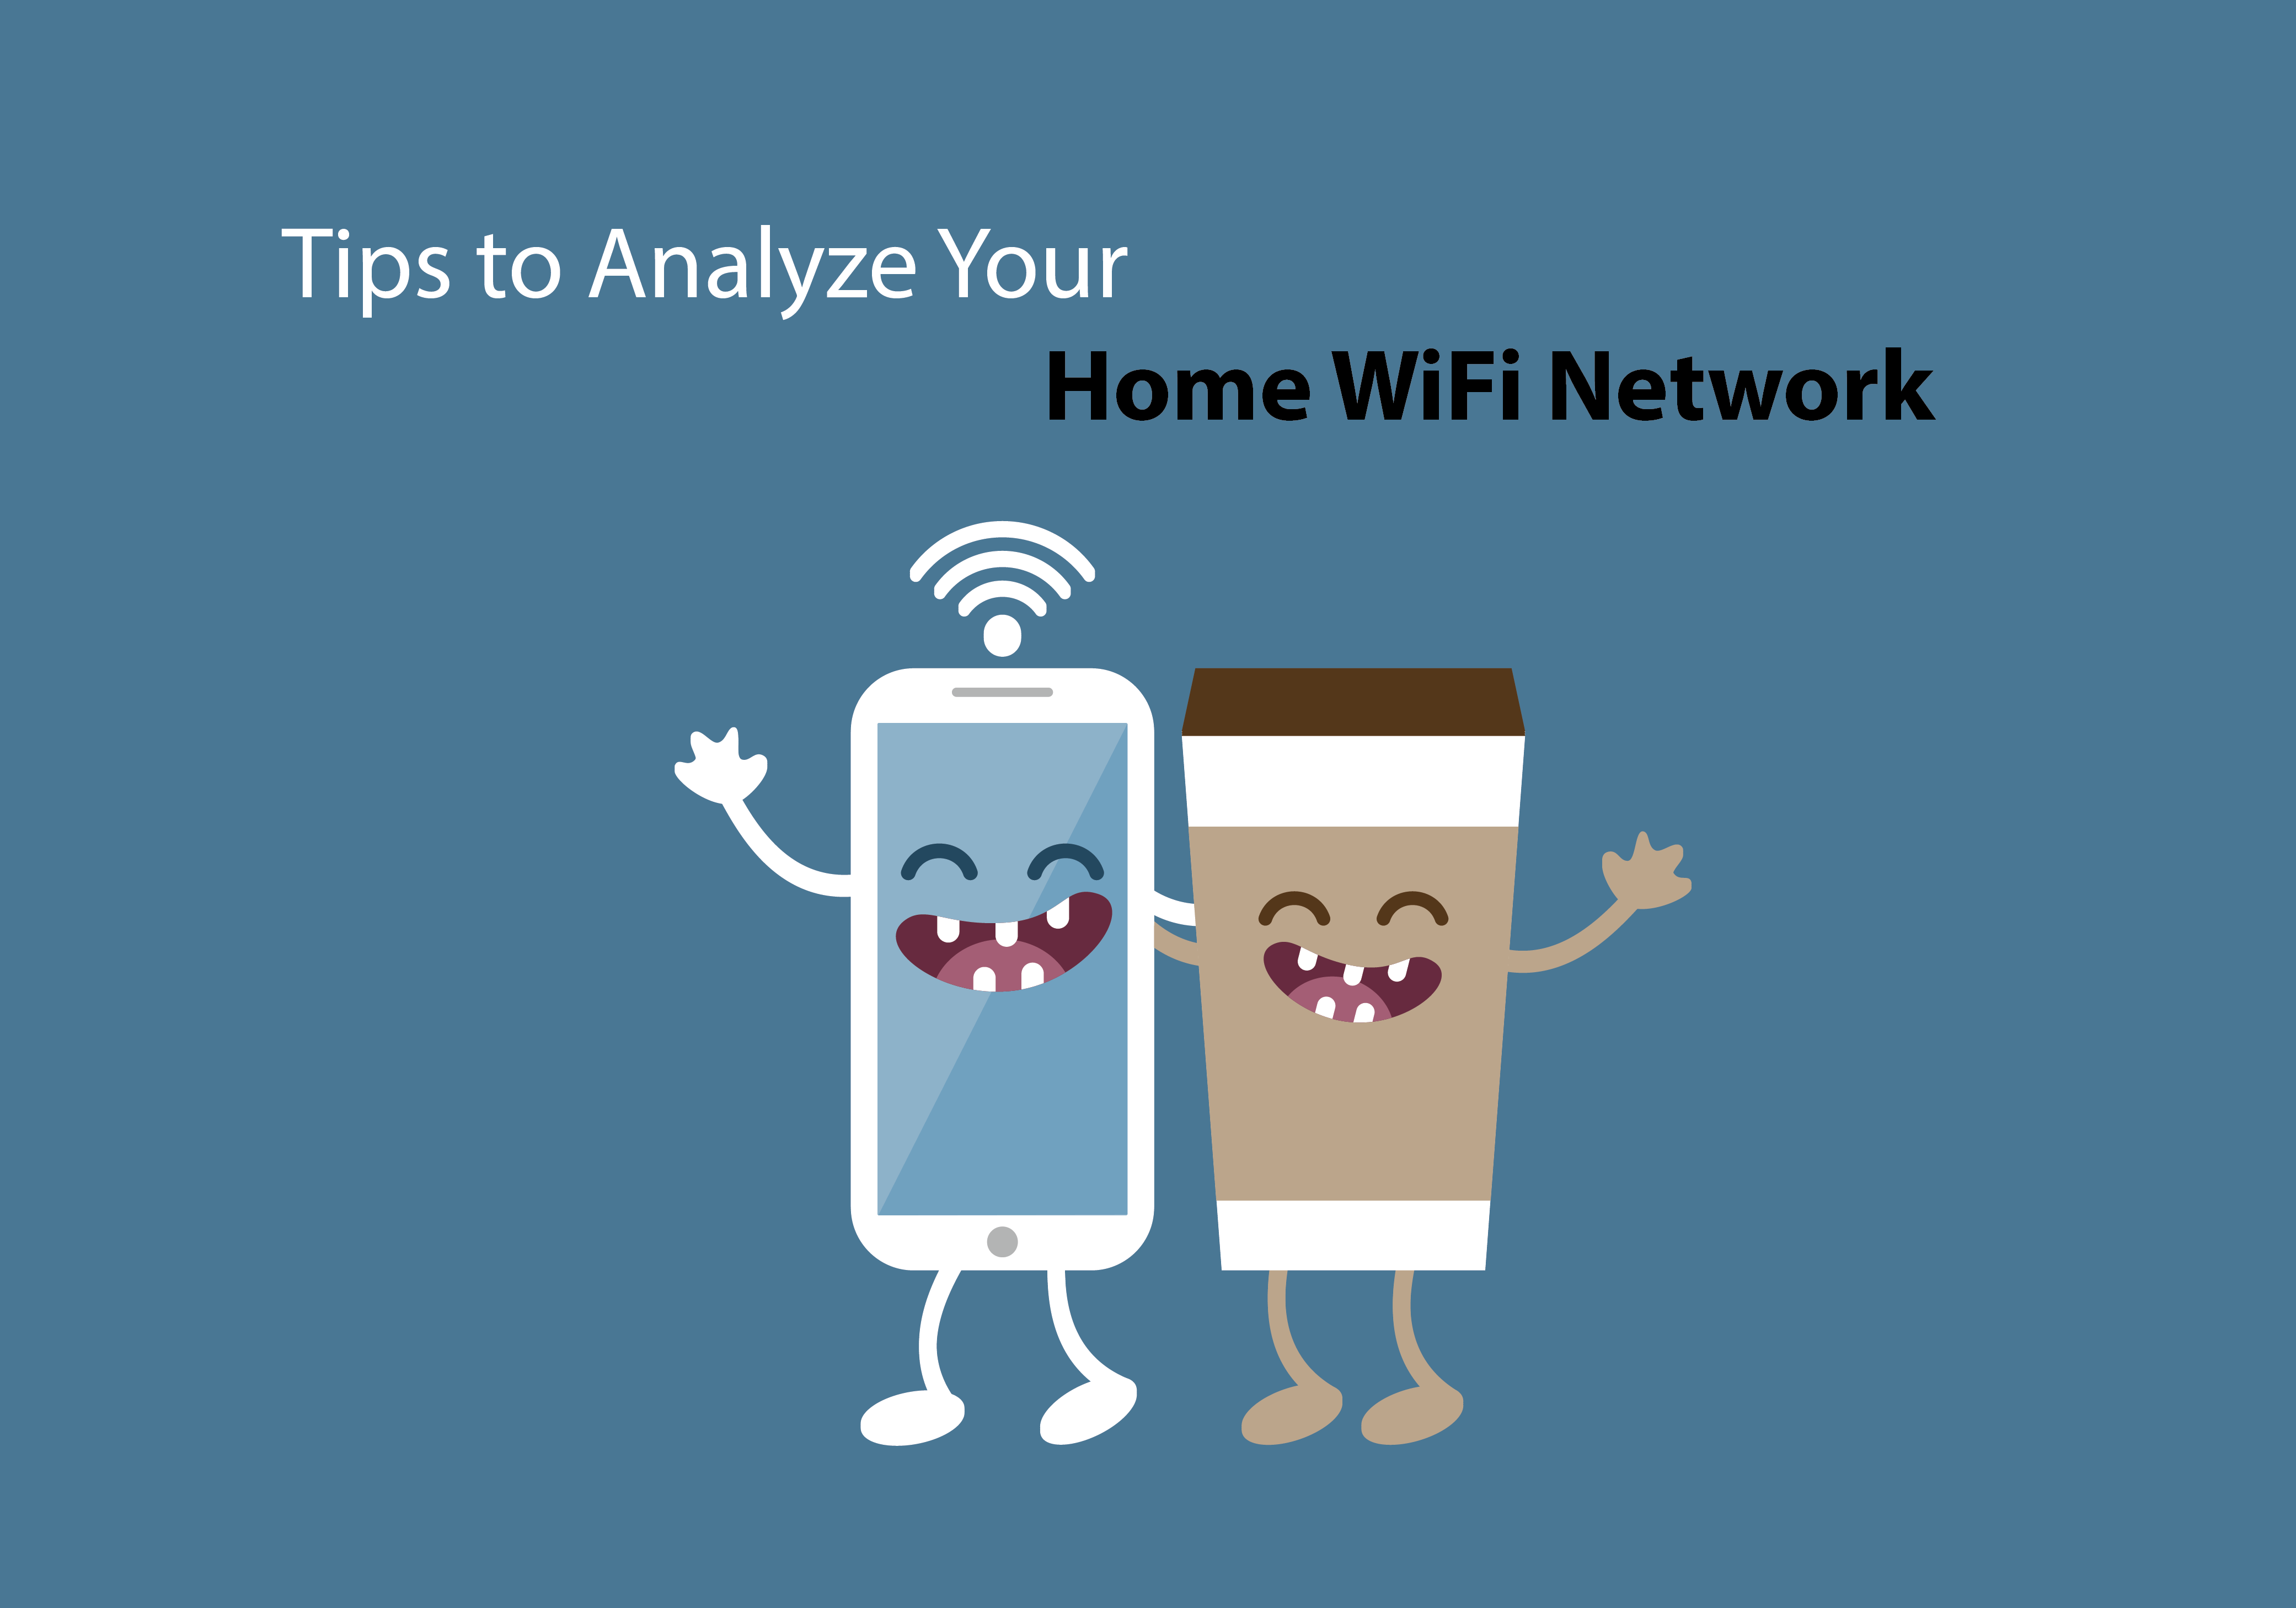 Tips to analyze home wifi network